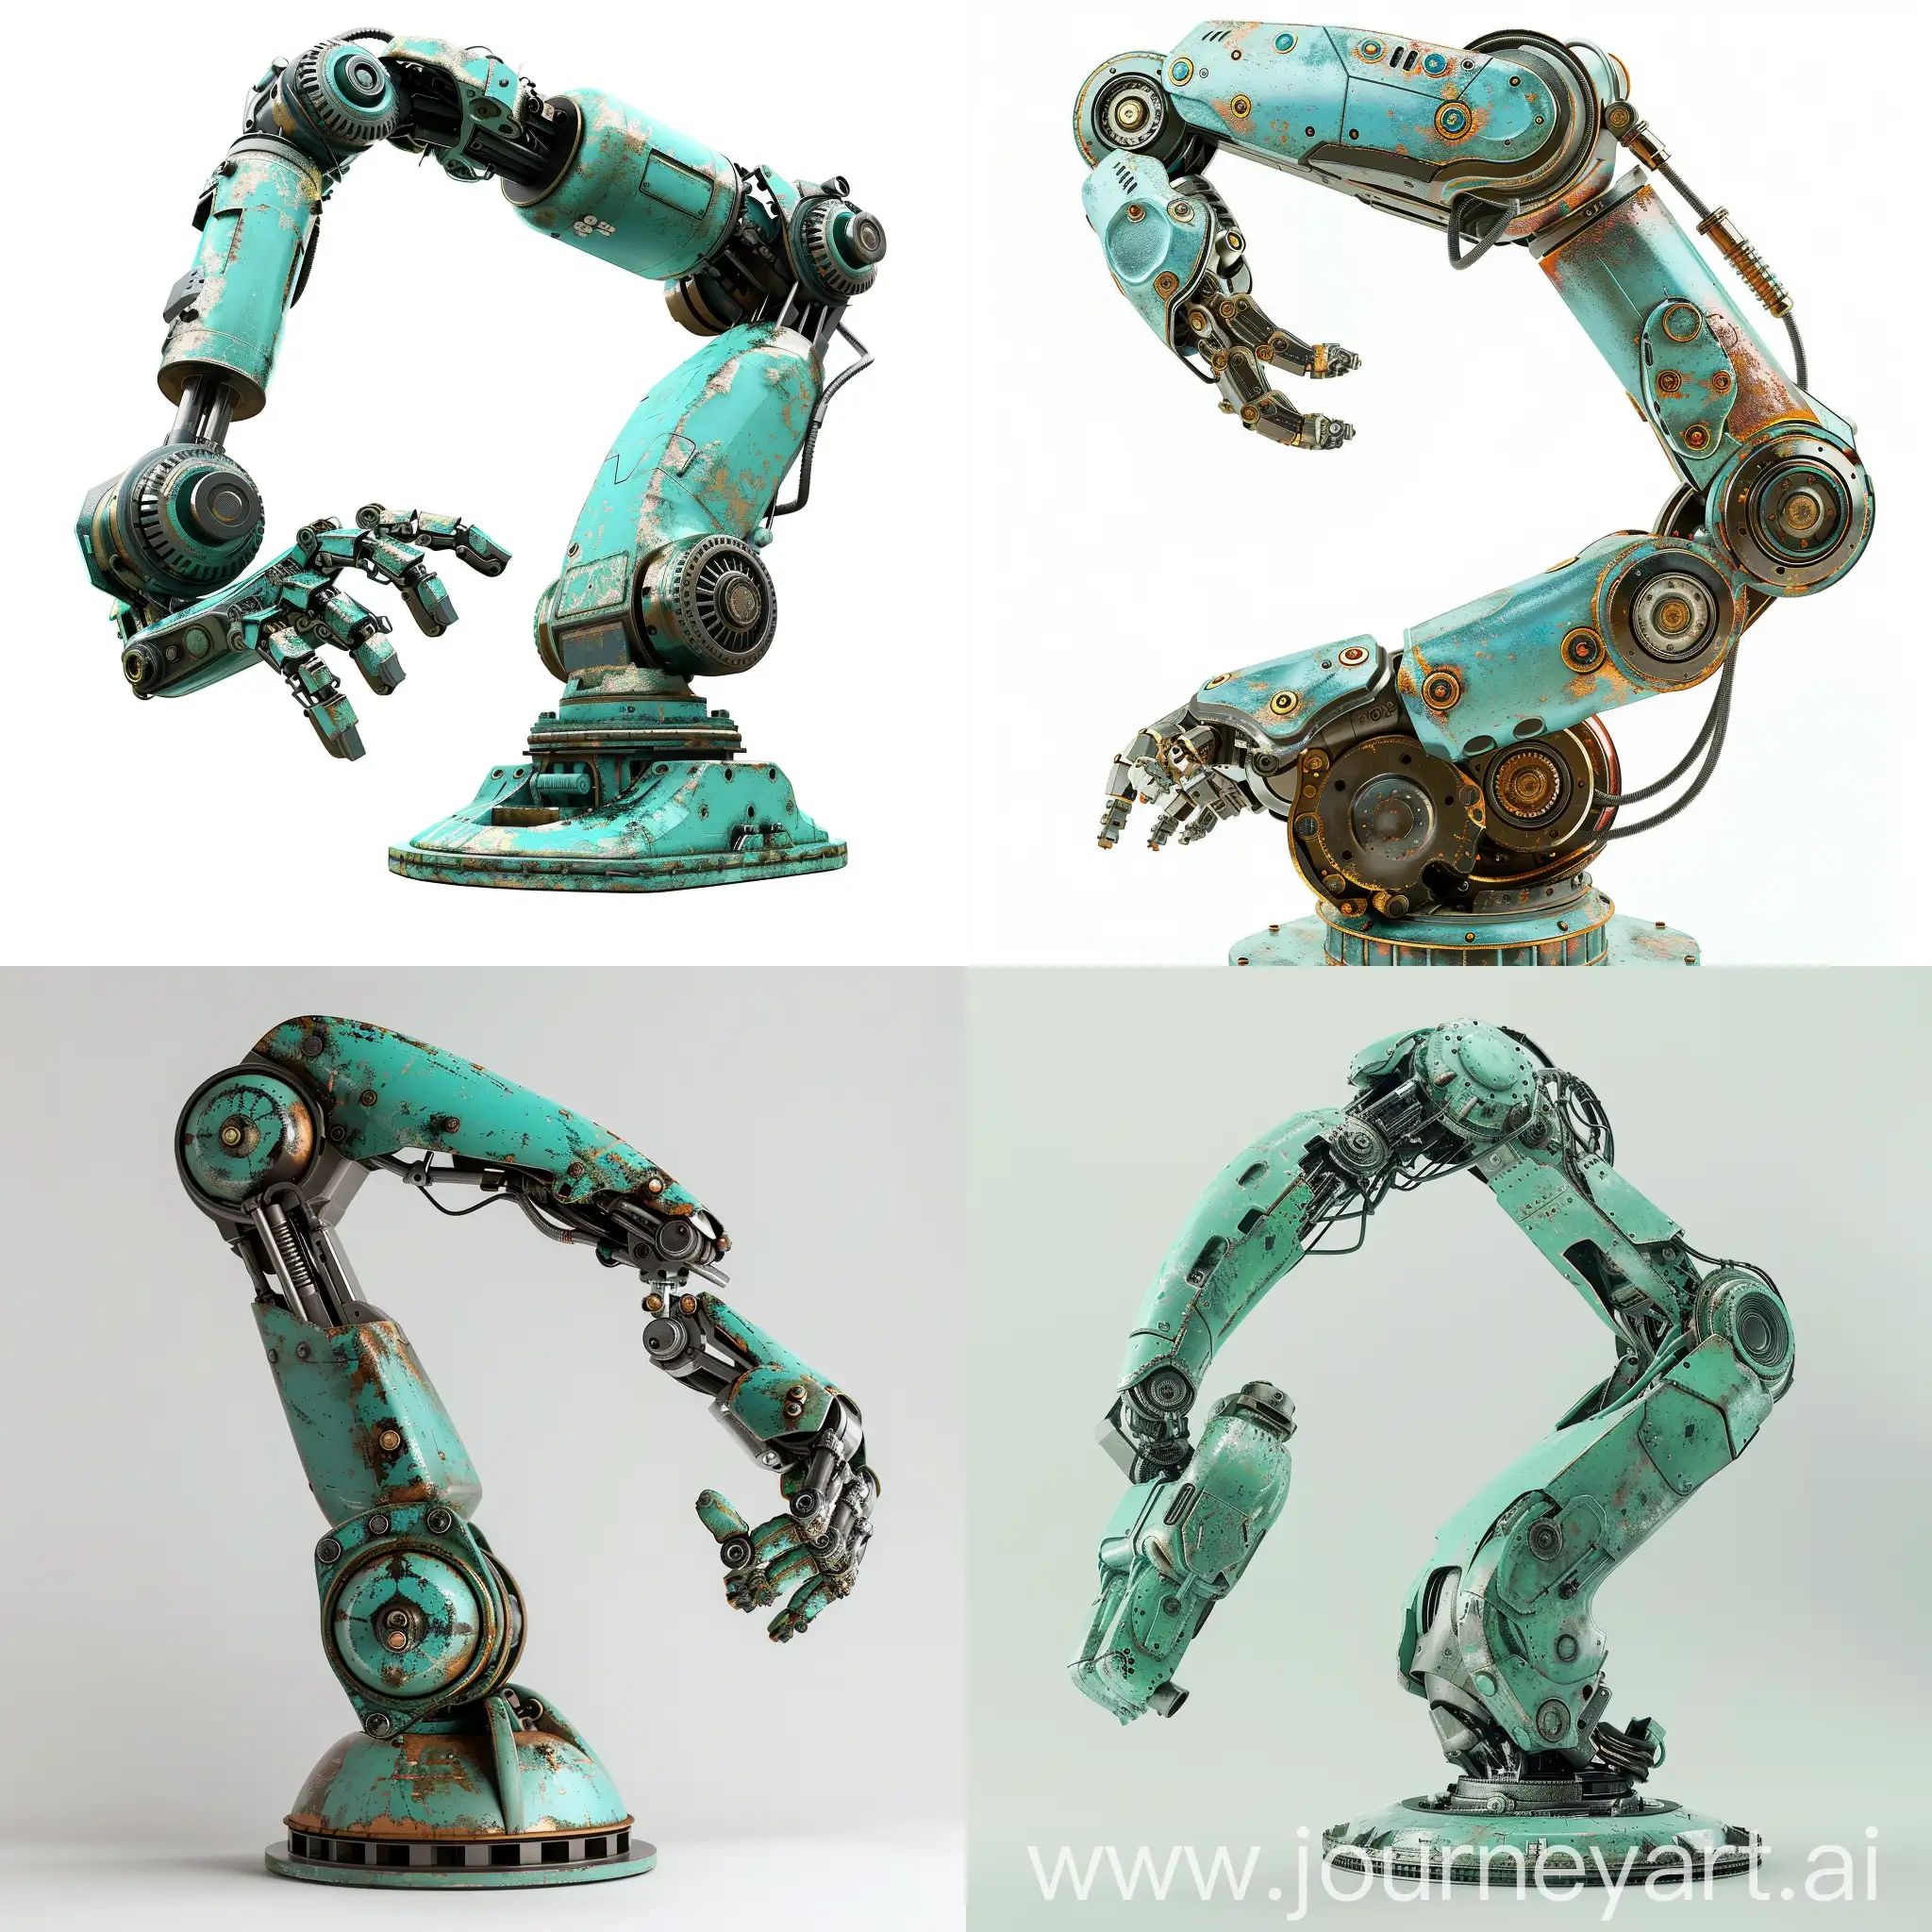 Robot-Arm-Workshop-Concept-with-GreenBlue-Metallic-Design